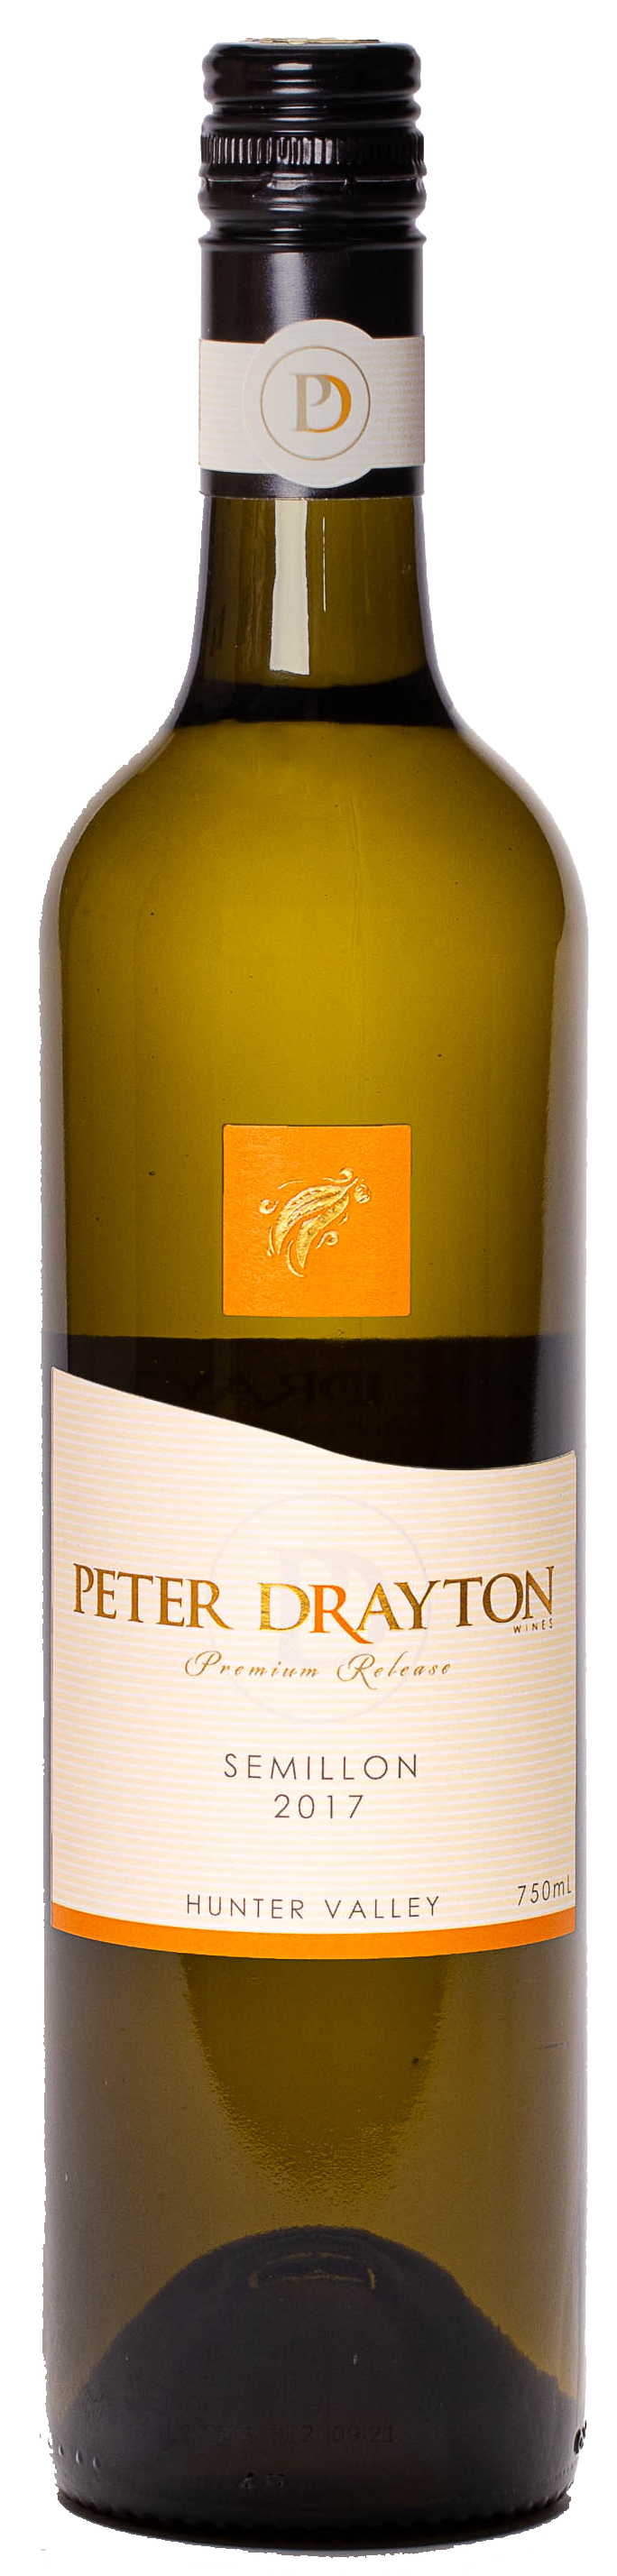 2017 Peter Drayton Museum Premium Release Semillon